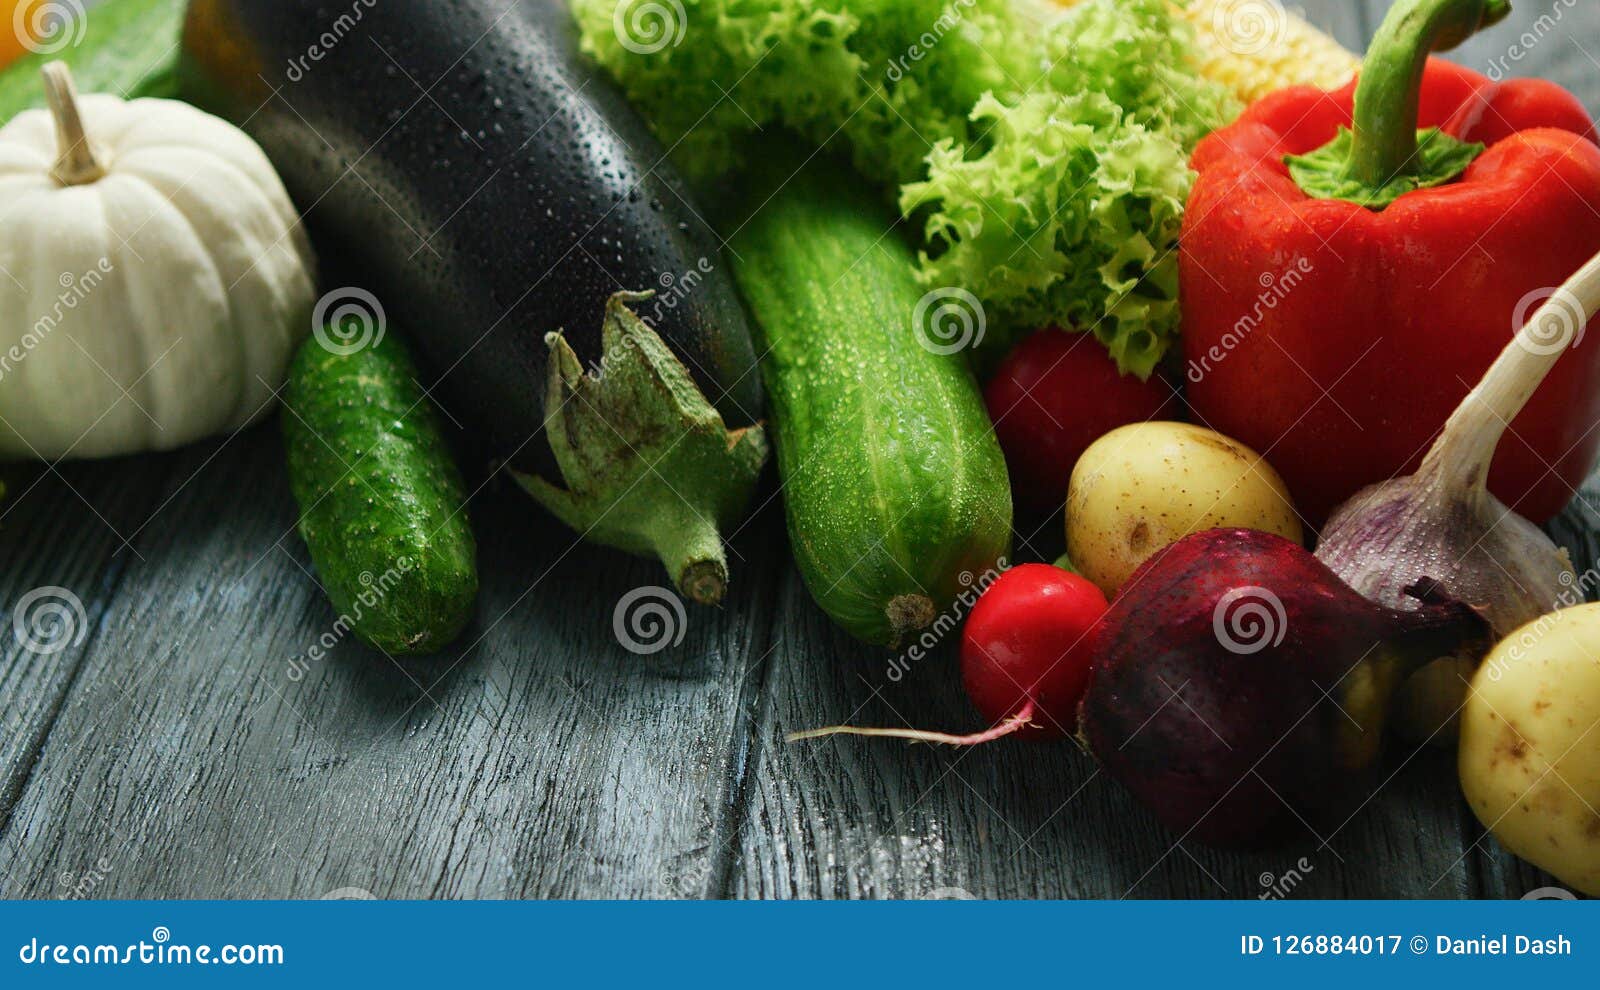 Abundance of Fresh Ripe Vegetables Stock Image - Image of cultivate ...